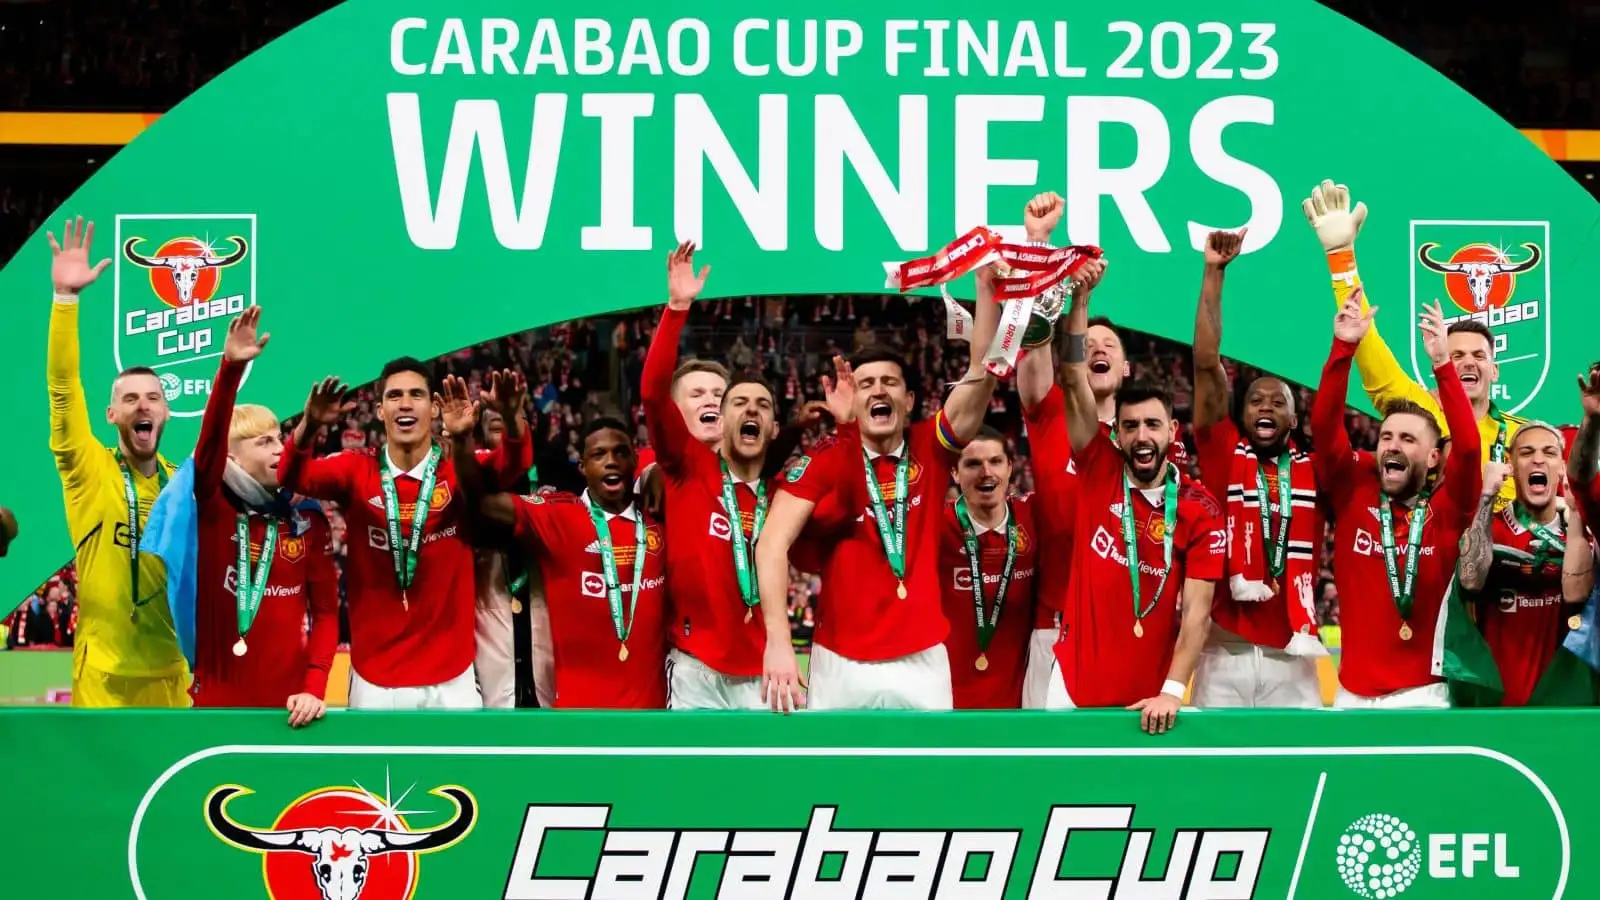 Man Utd Carabao Cup trophy lift